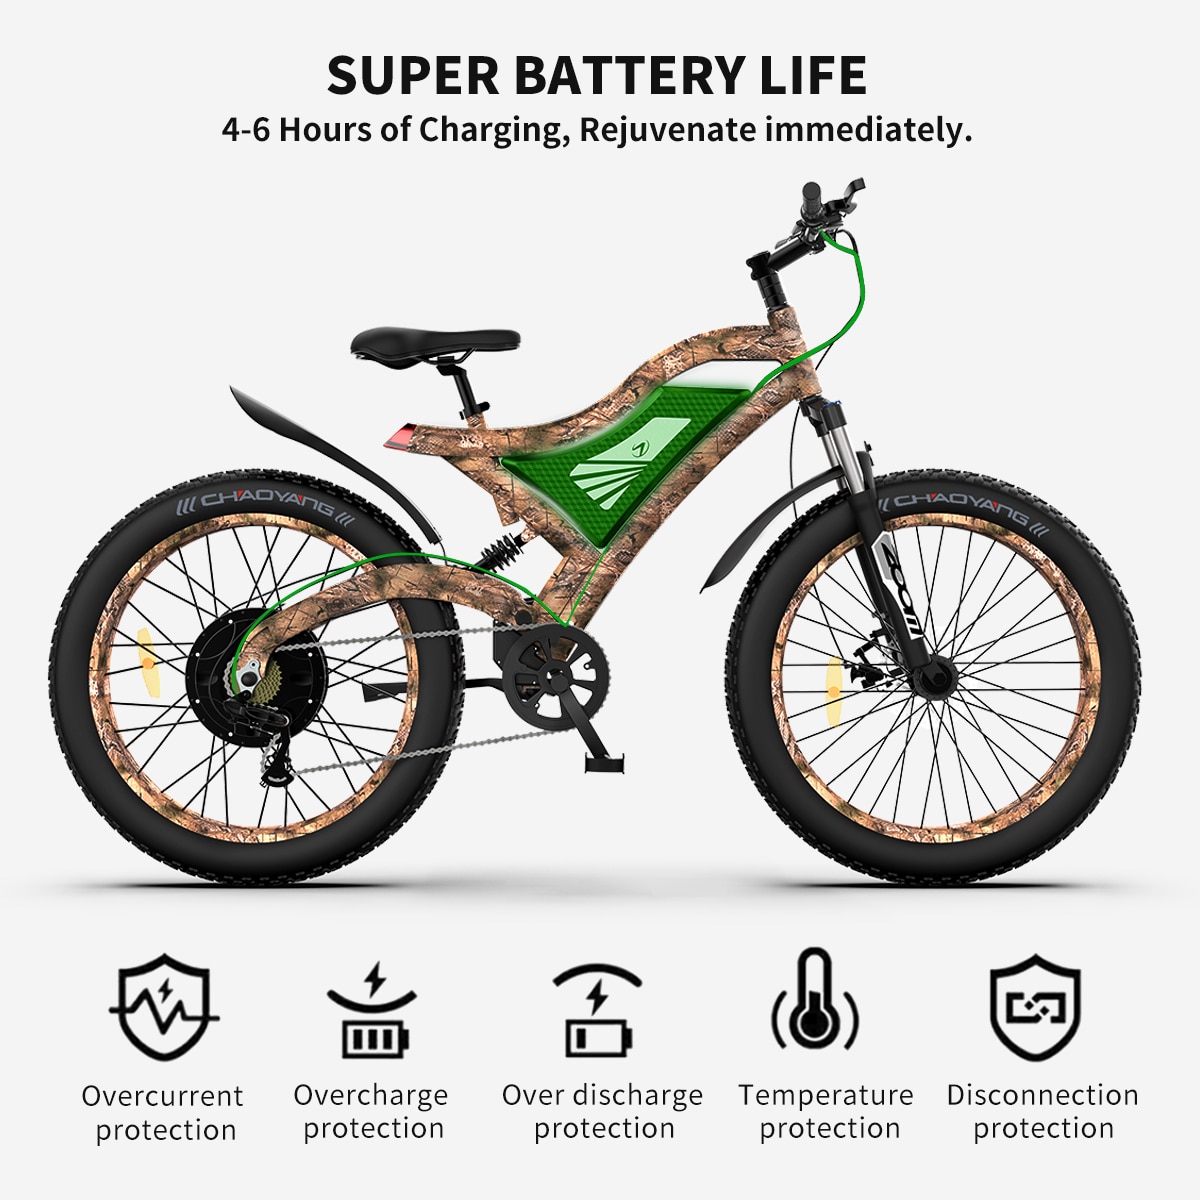 AOSTIRMOTOR Electric Bike S18 1500W Mountain Ebike 48V 15Ah Removable Lithium Battery 4.0 Fat Tire Ebike Beach Cruiser Bike